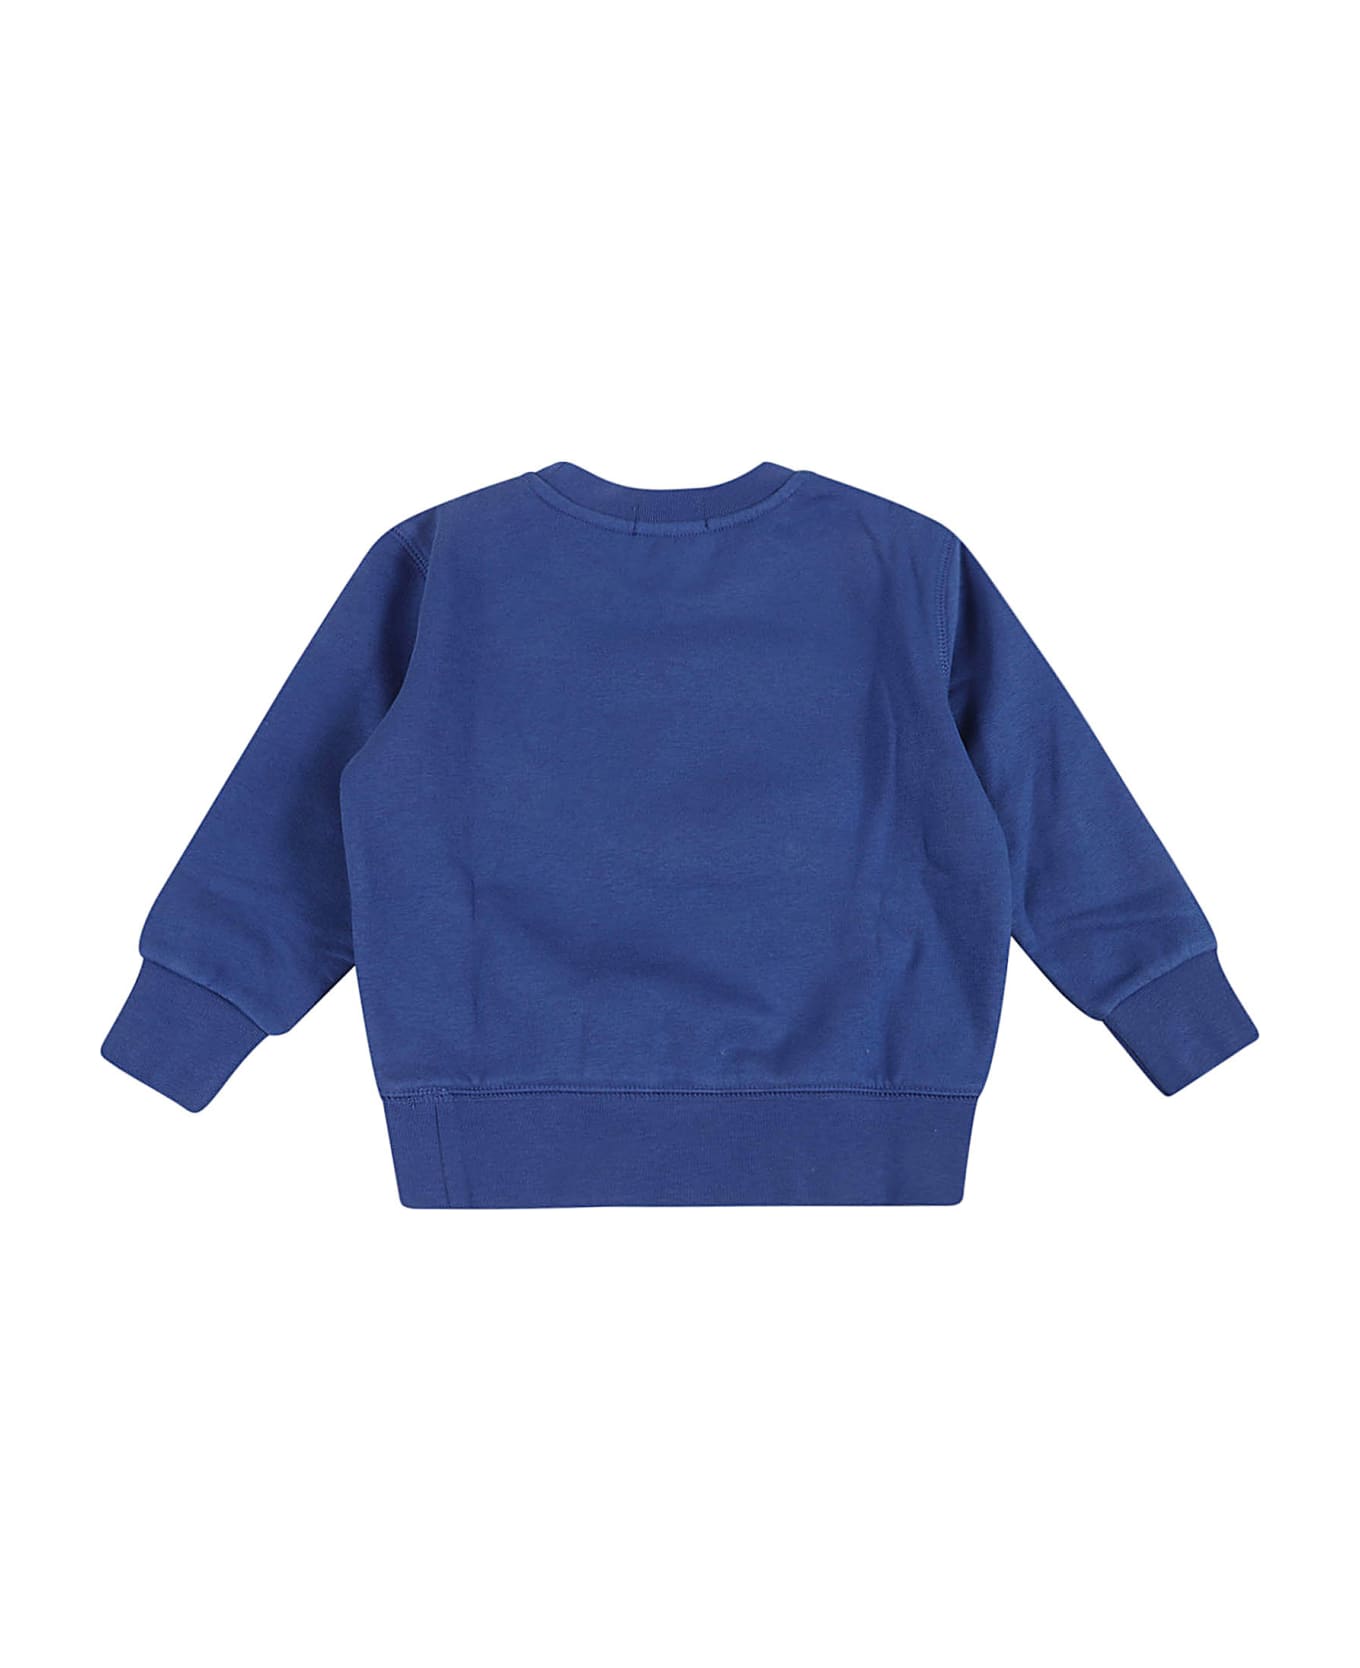 Ralph Lauren Lscnm4-knit Shirts-sweatshirt - Paris Bear Beach Royal